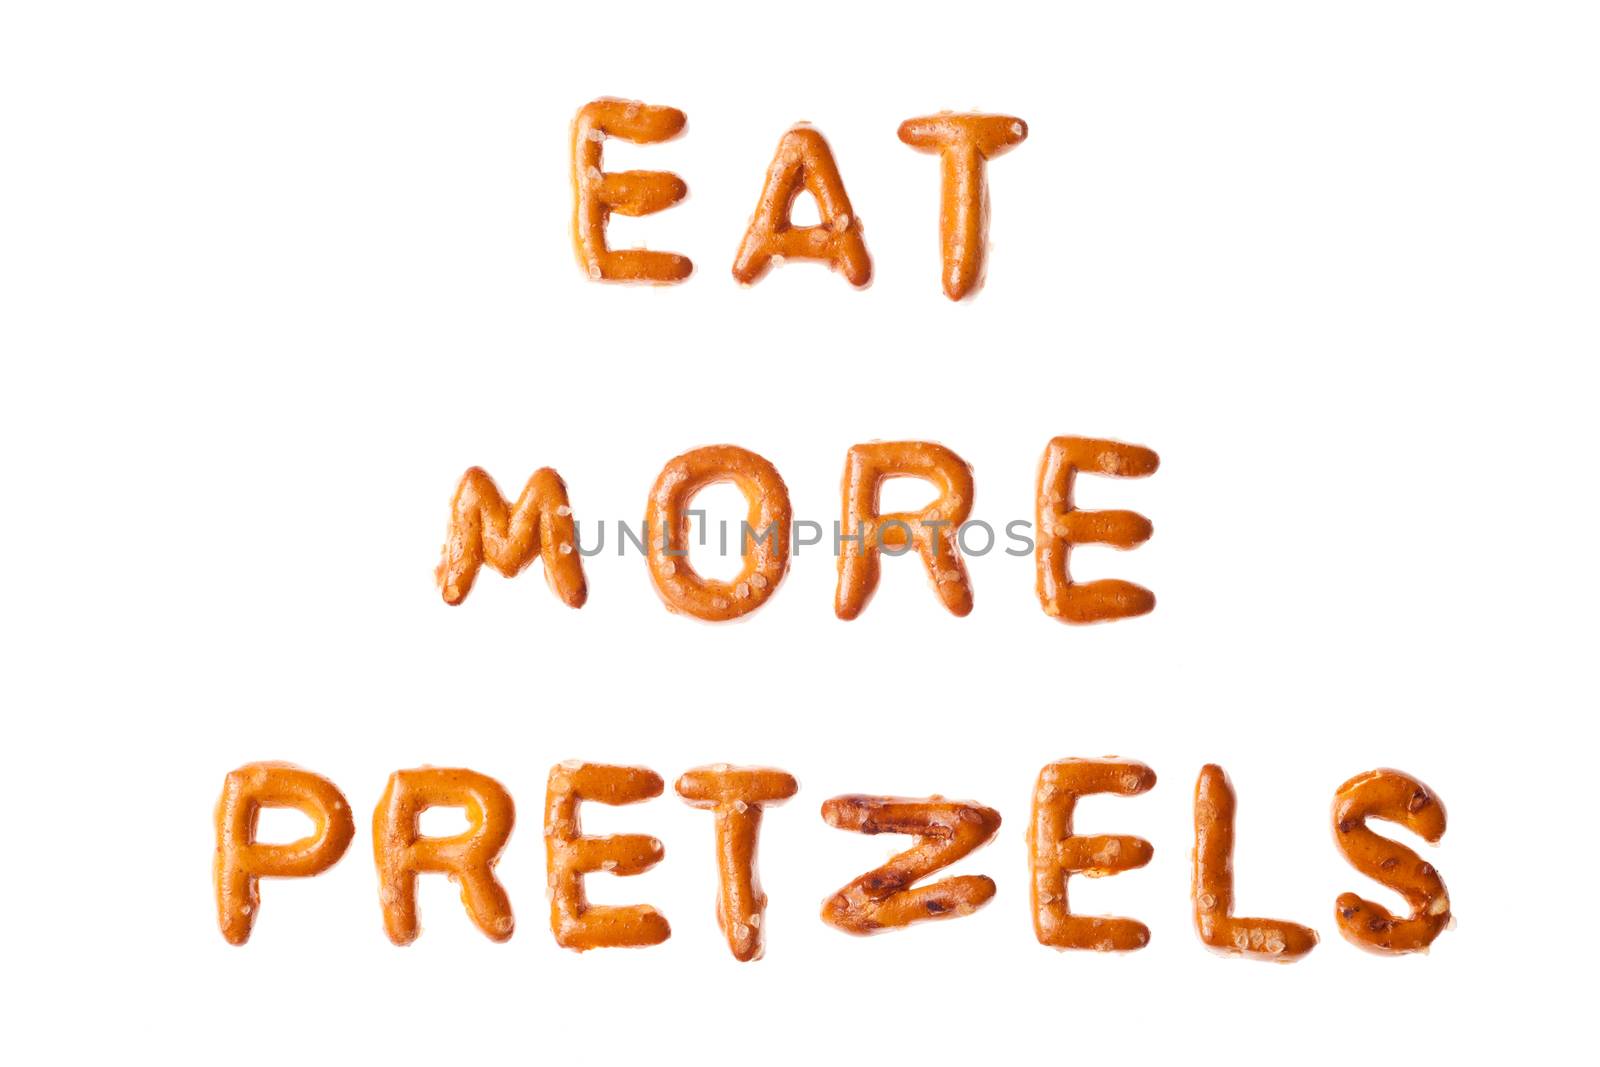 Alphabet pretzel words EAT MORE PRETZELS isolated by PiLens